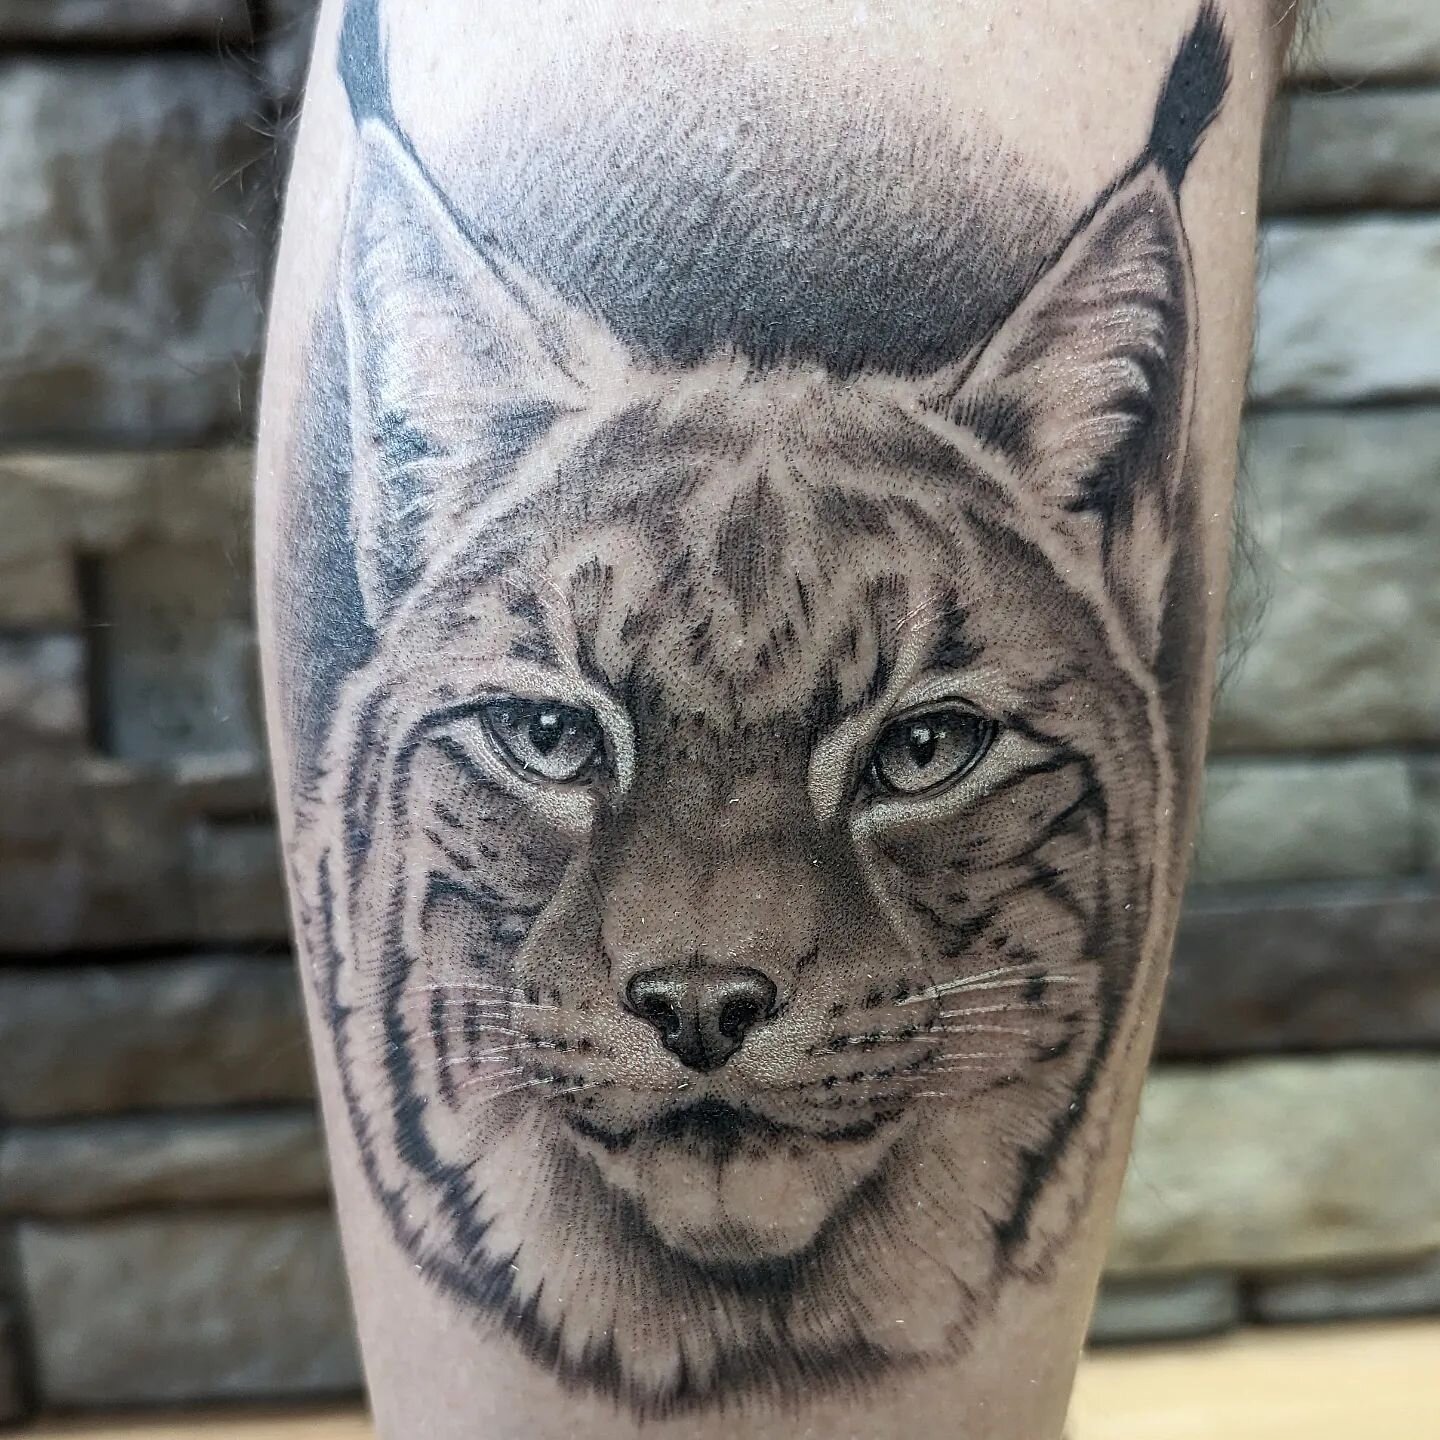 Lynx by:Nelson
@nelson.tattoos 
#tattoo #realistictattoo #blackandgreytattoo